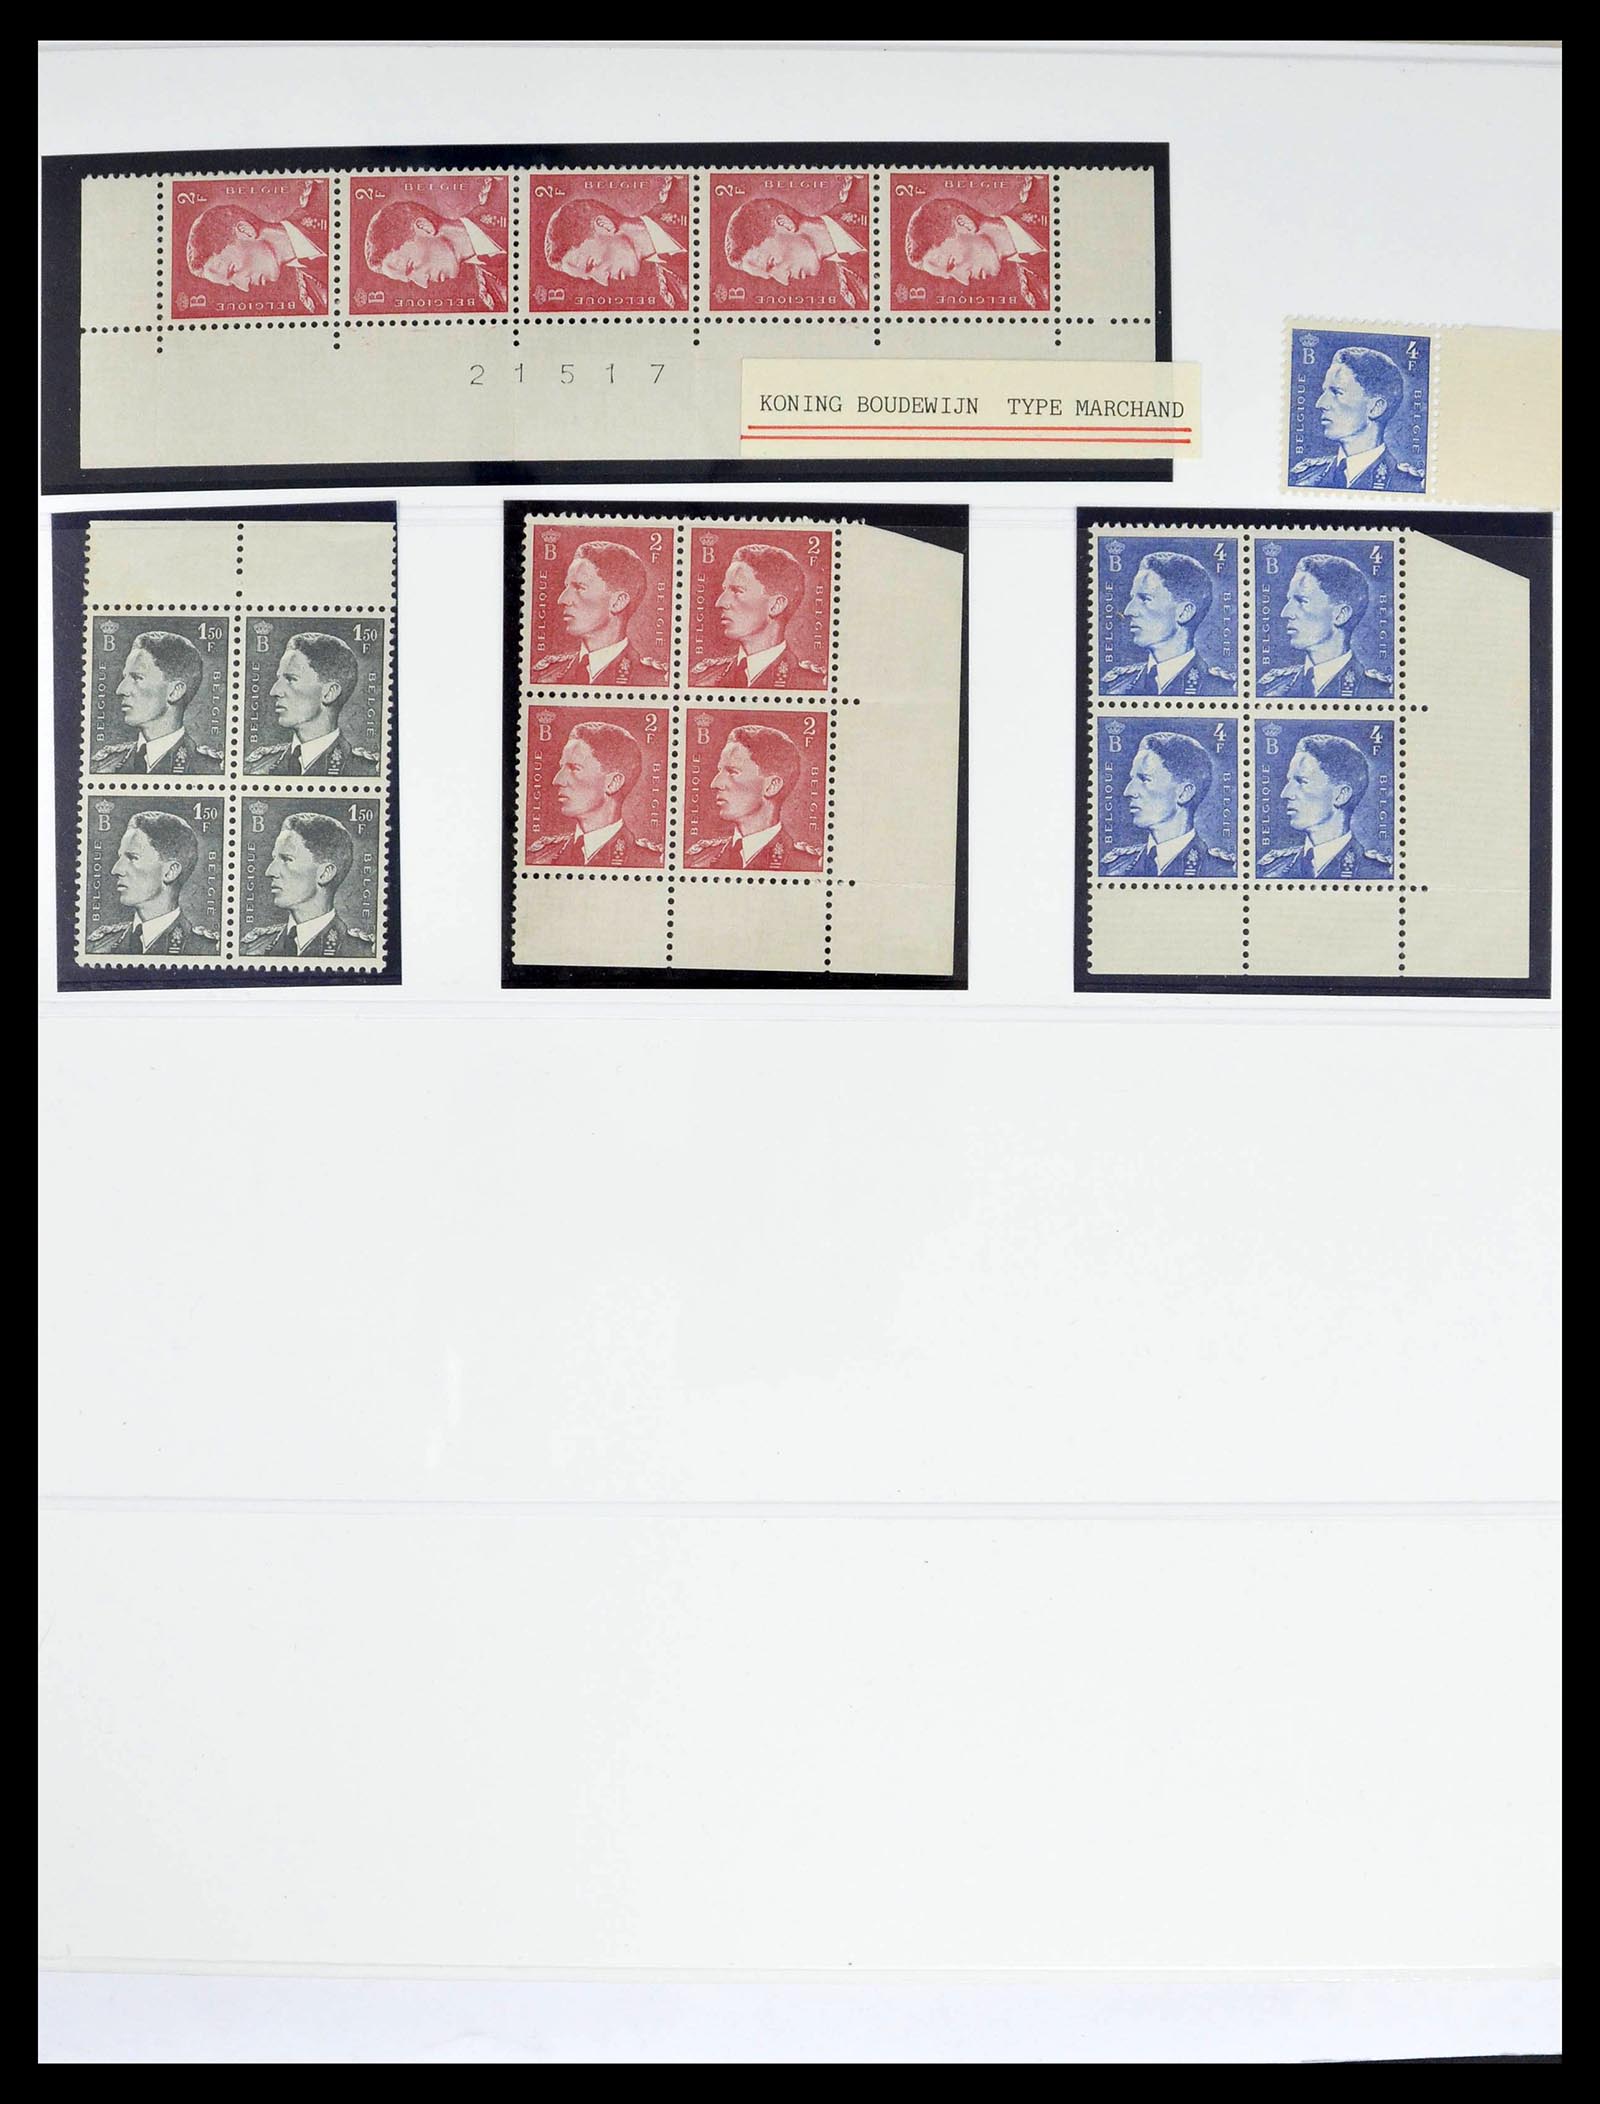 39229 0001 - Stamp collection 39229 Belgium Boudewijn with glasses 1952-1975.